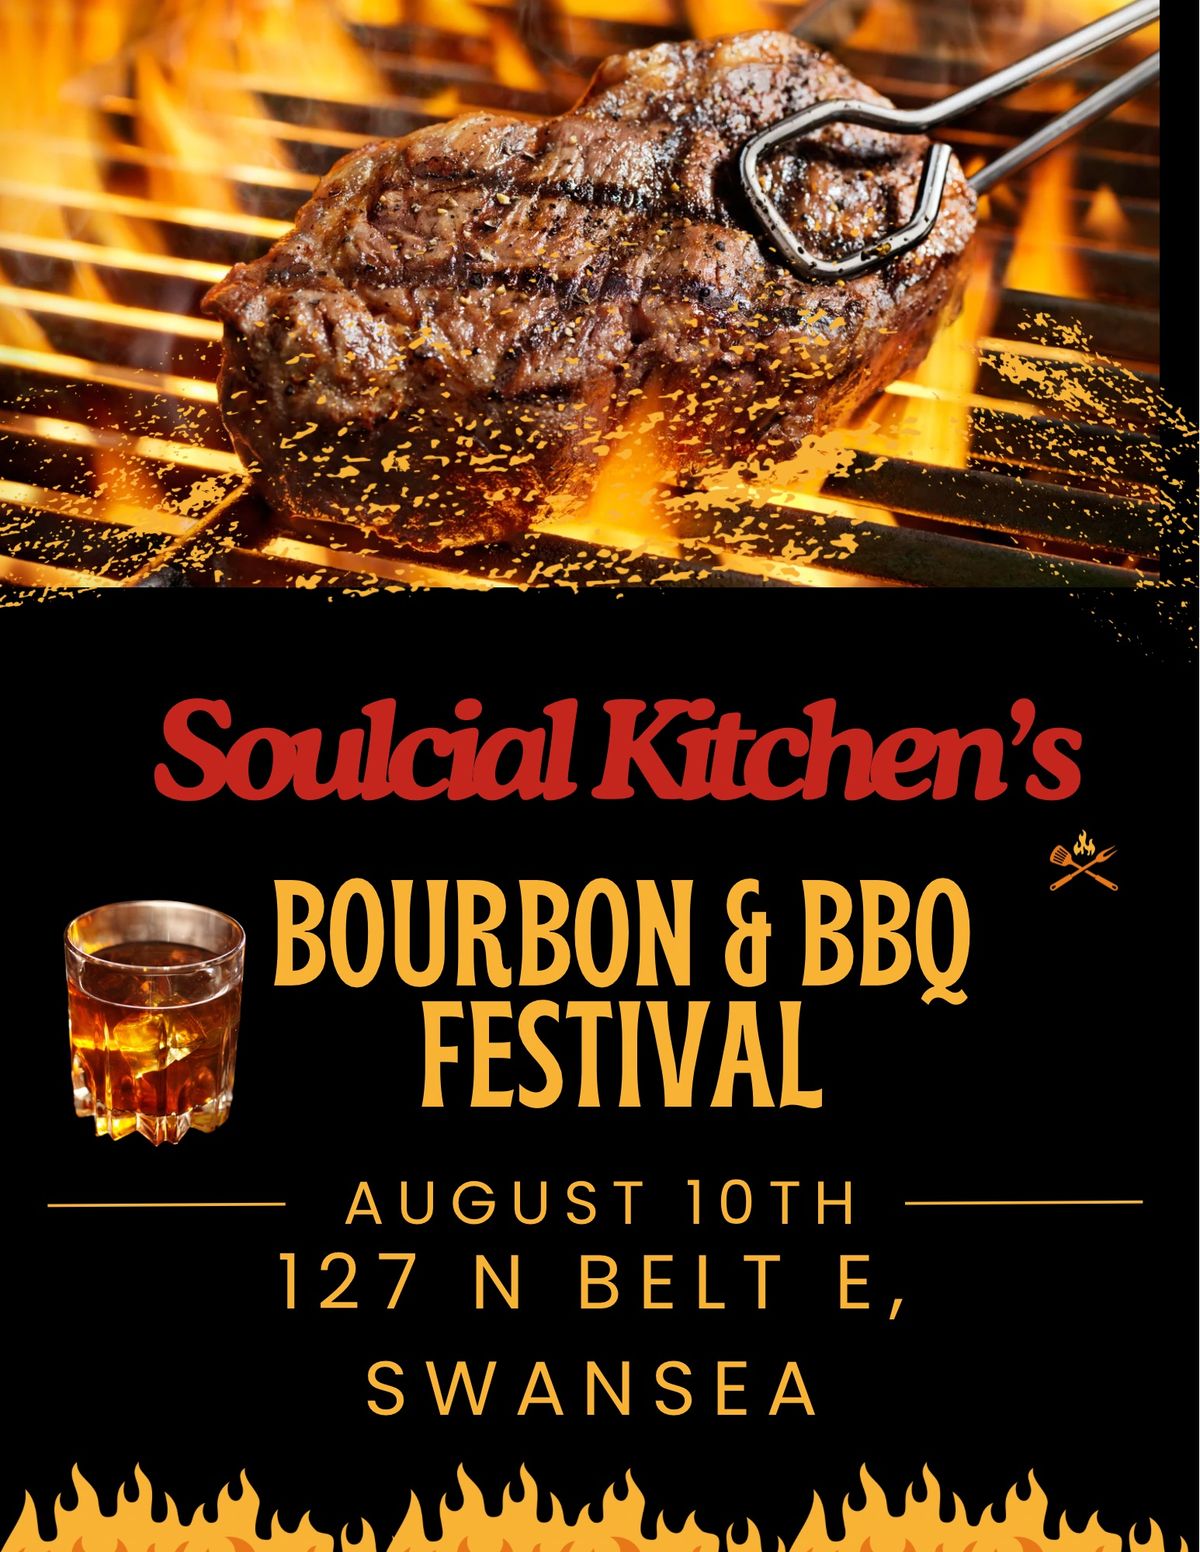 Bourbon & BBQ Festival